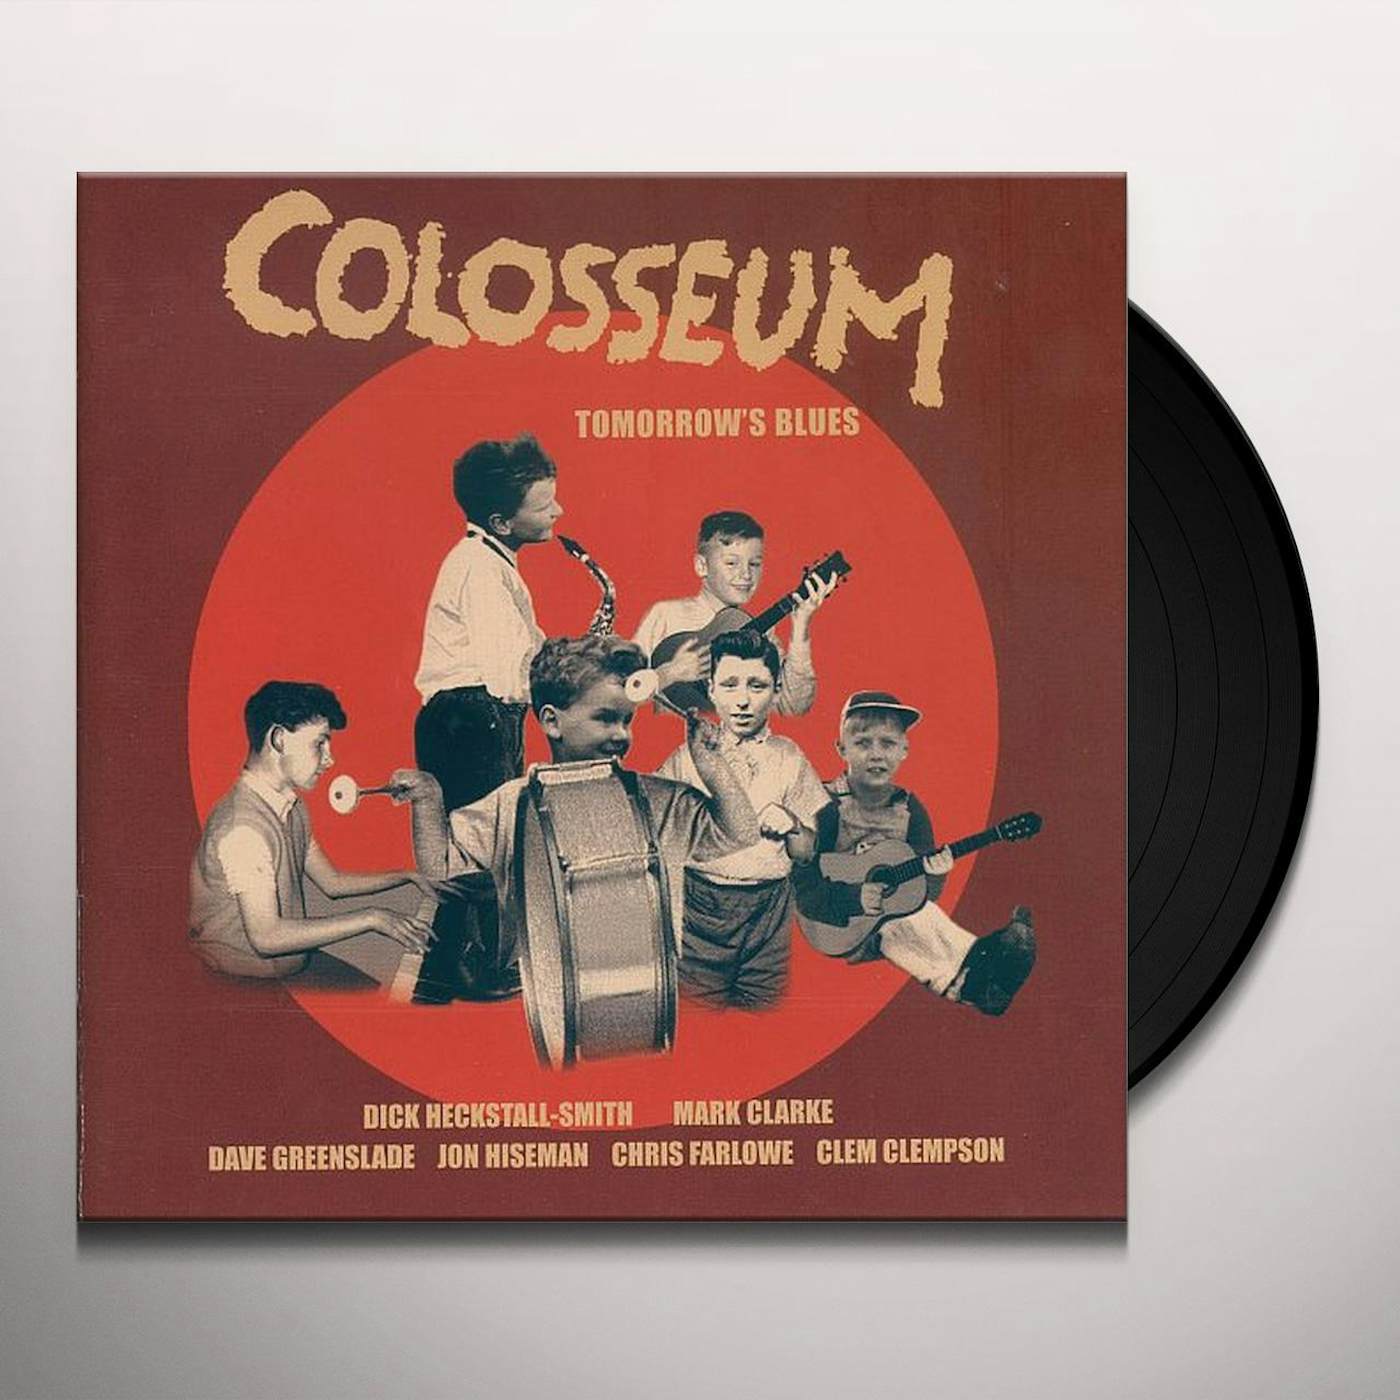 Colosseum Tomorrow's Blues Vinyl Record